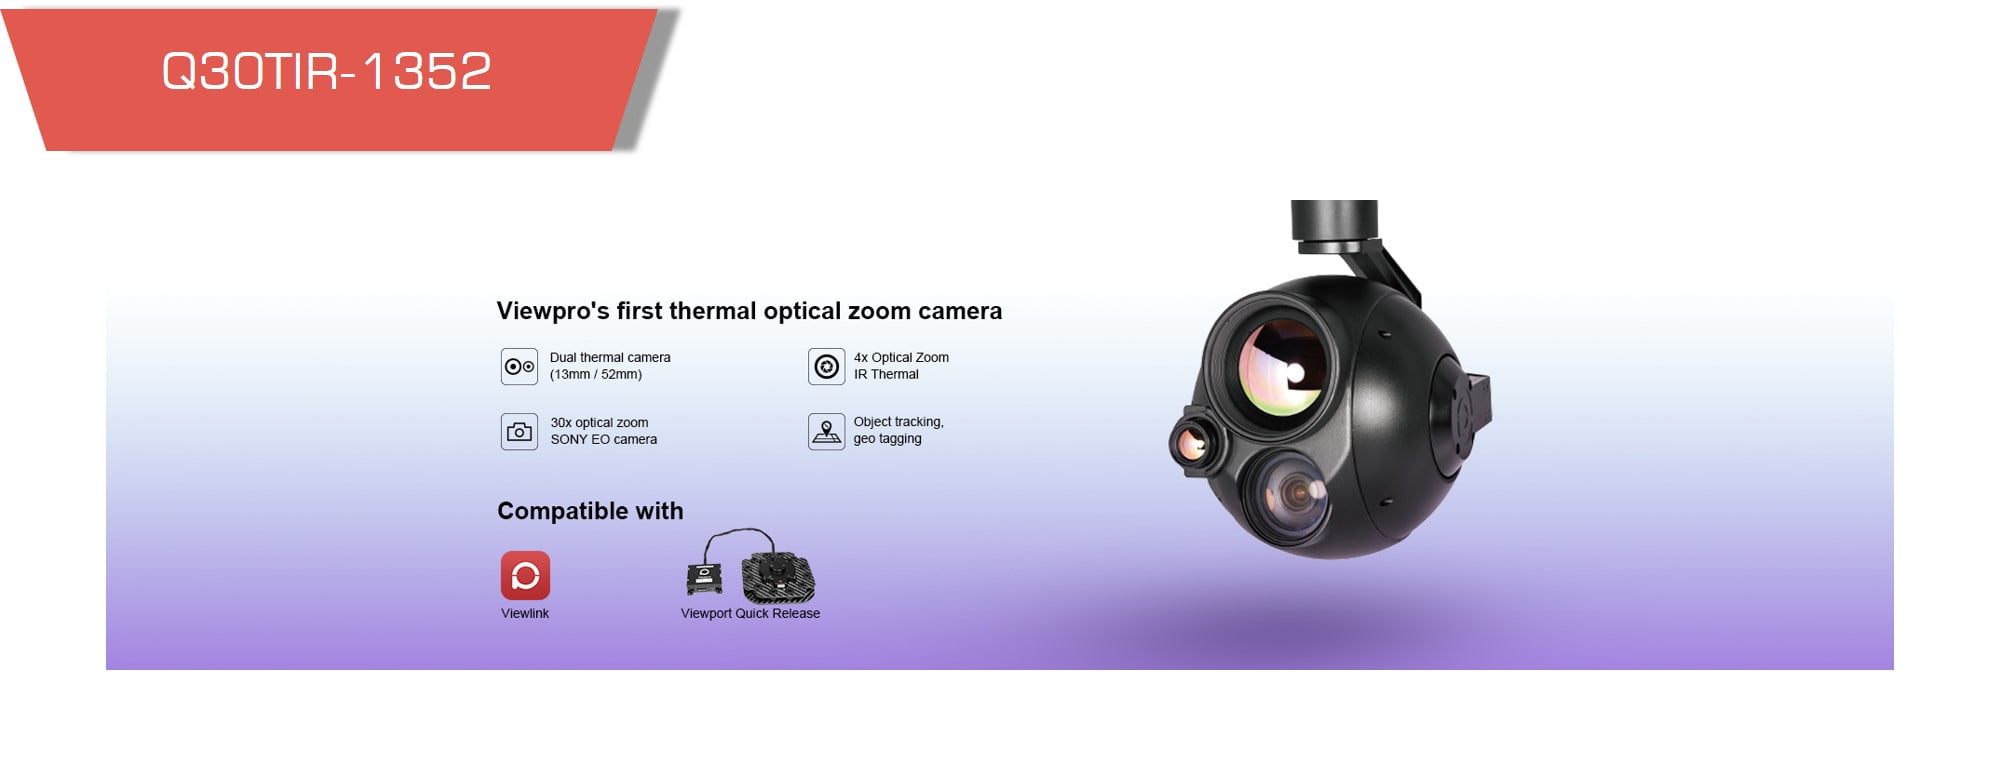 Q30tir 135210 - gimbal q30tir, dual sensor, optical zoom, night vision, 30x optical zoom, thermal camera - motionew - 4